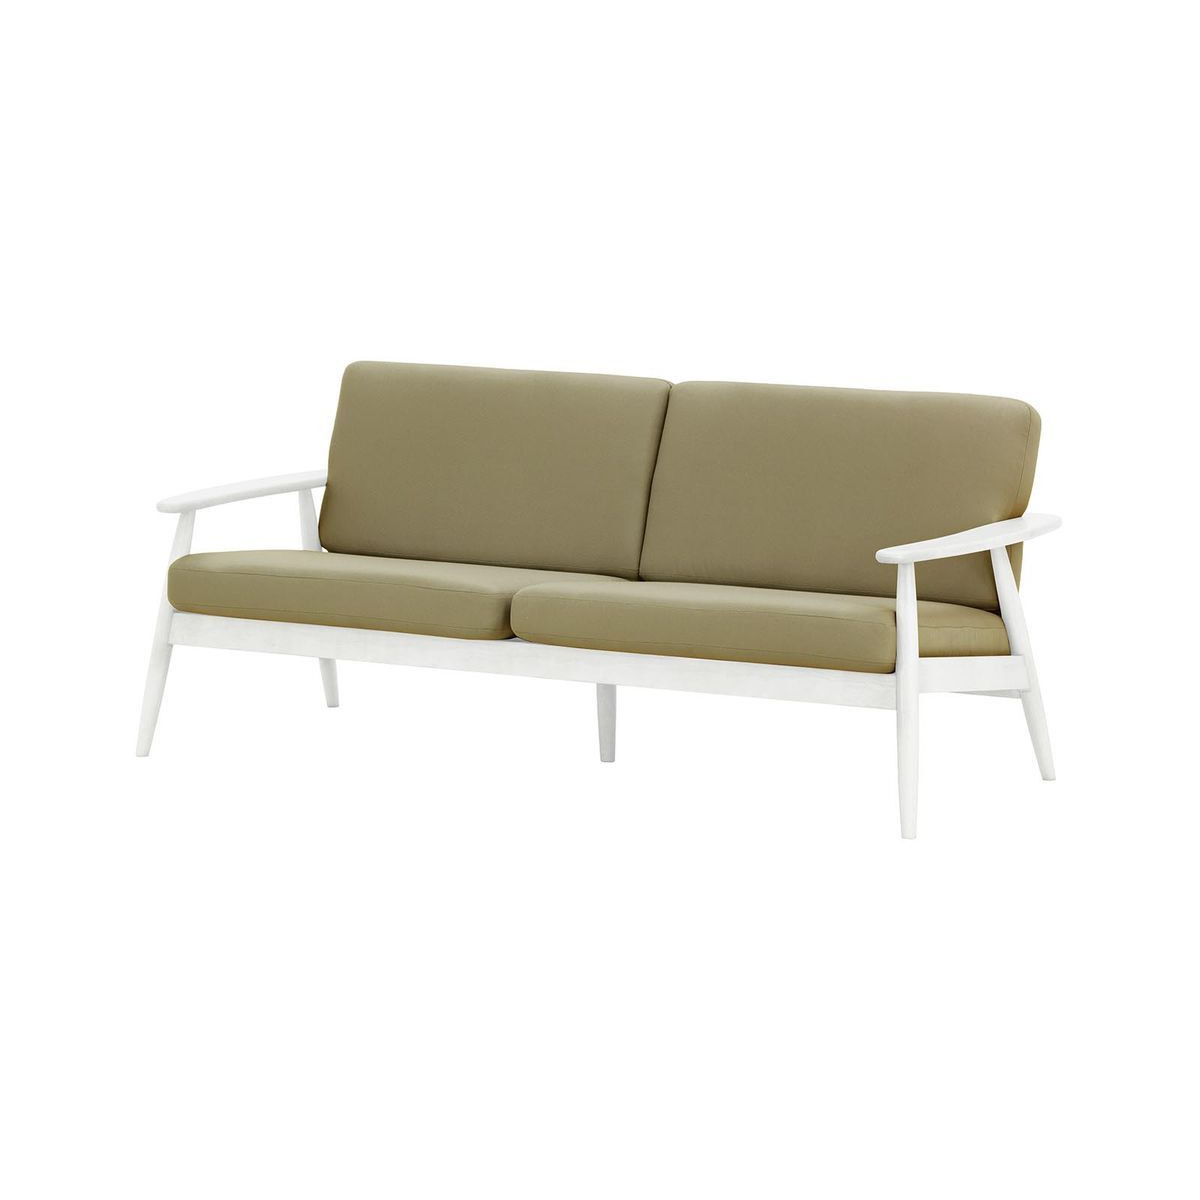 Demure Aqua 3 Seater Garden Sofa, beige, Leg colour: 8035 white - image 1